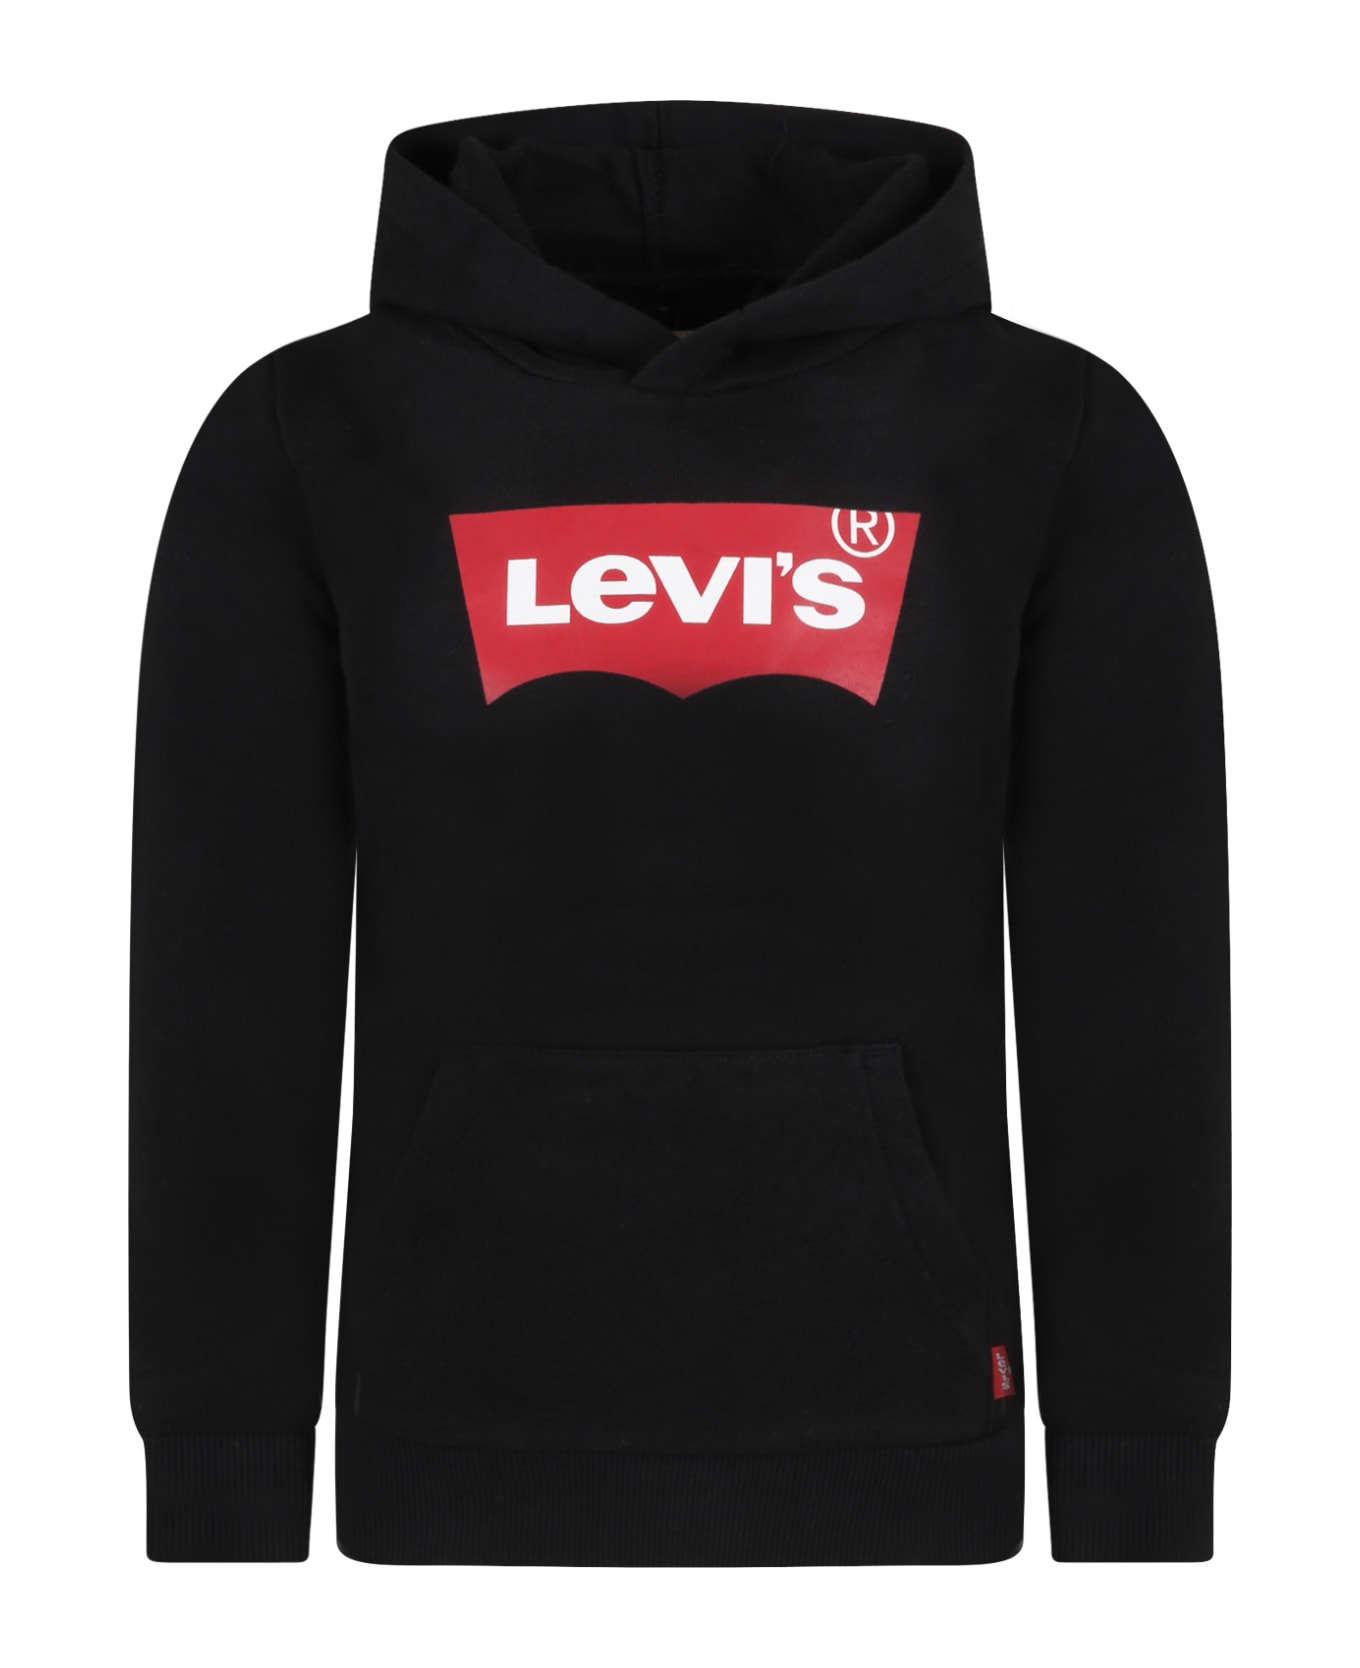 Levi's Black Sweatshirt For Kids With Logo - Black